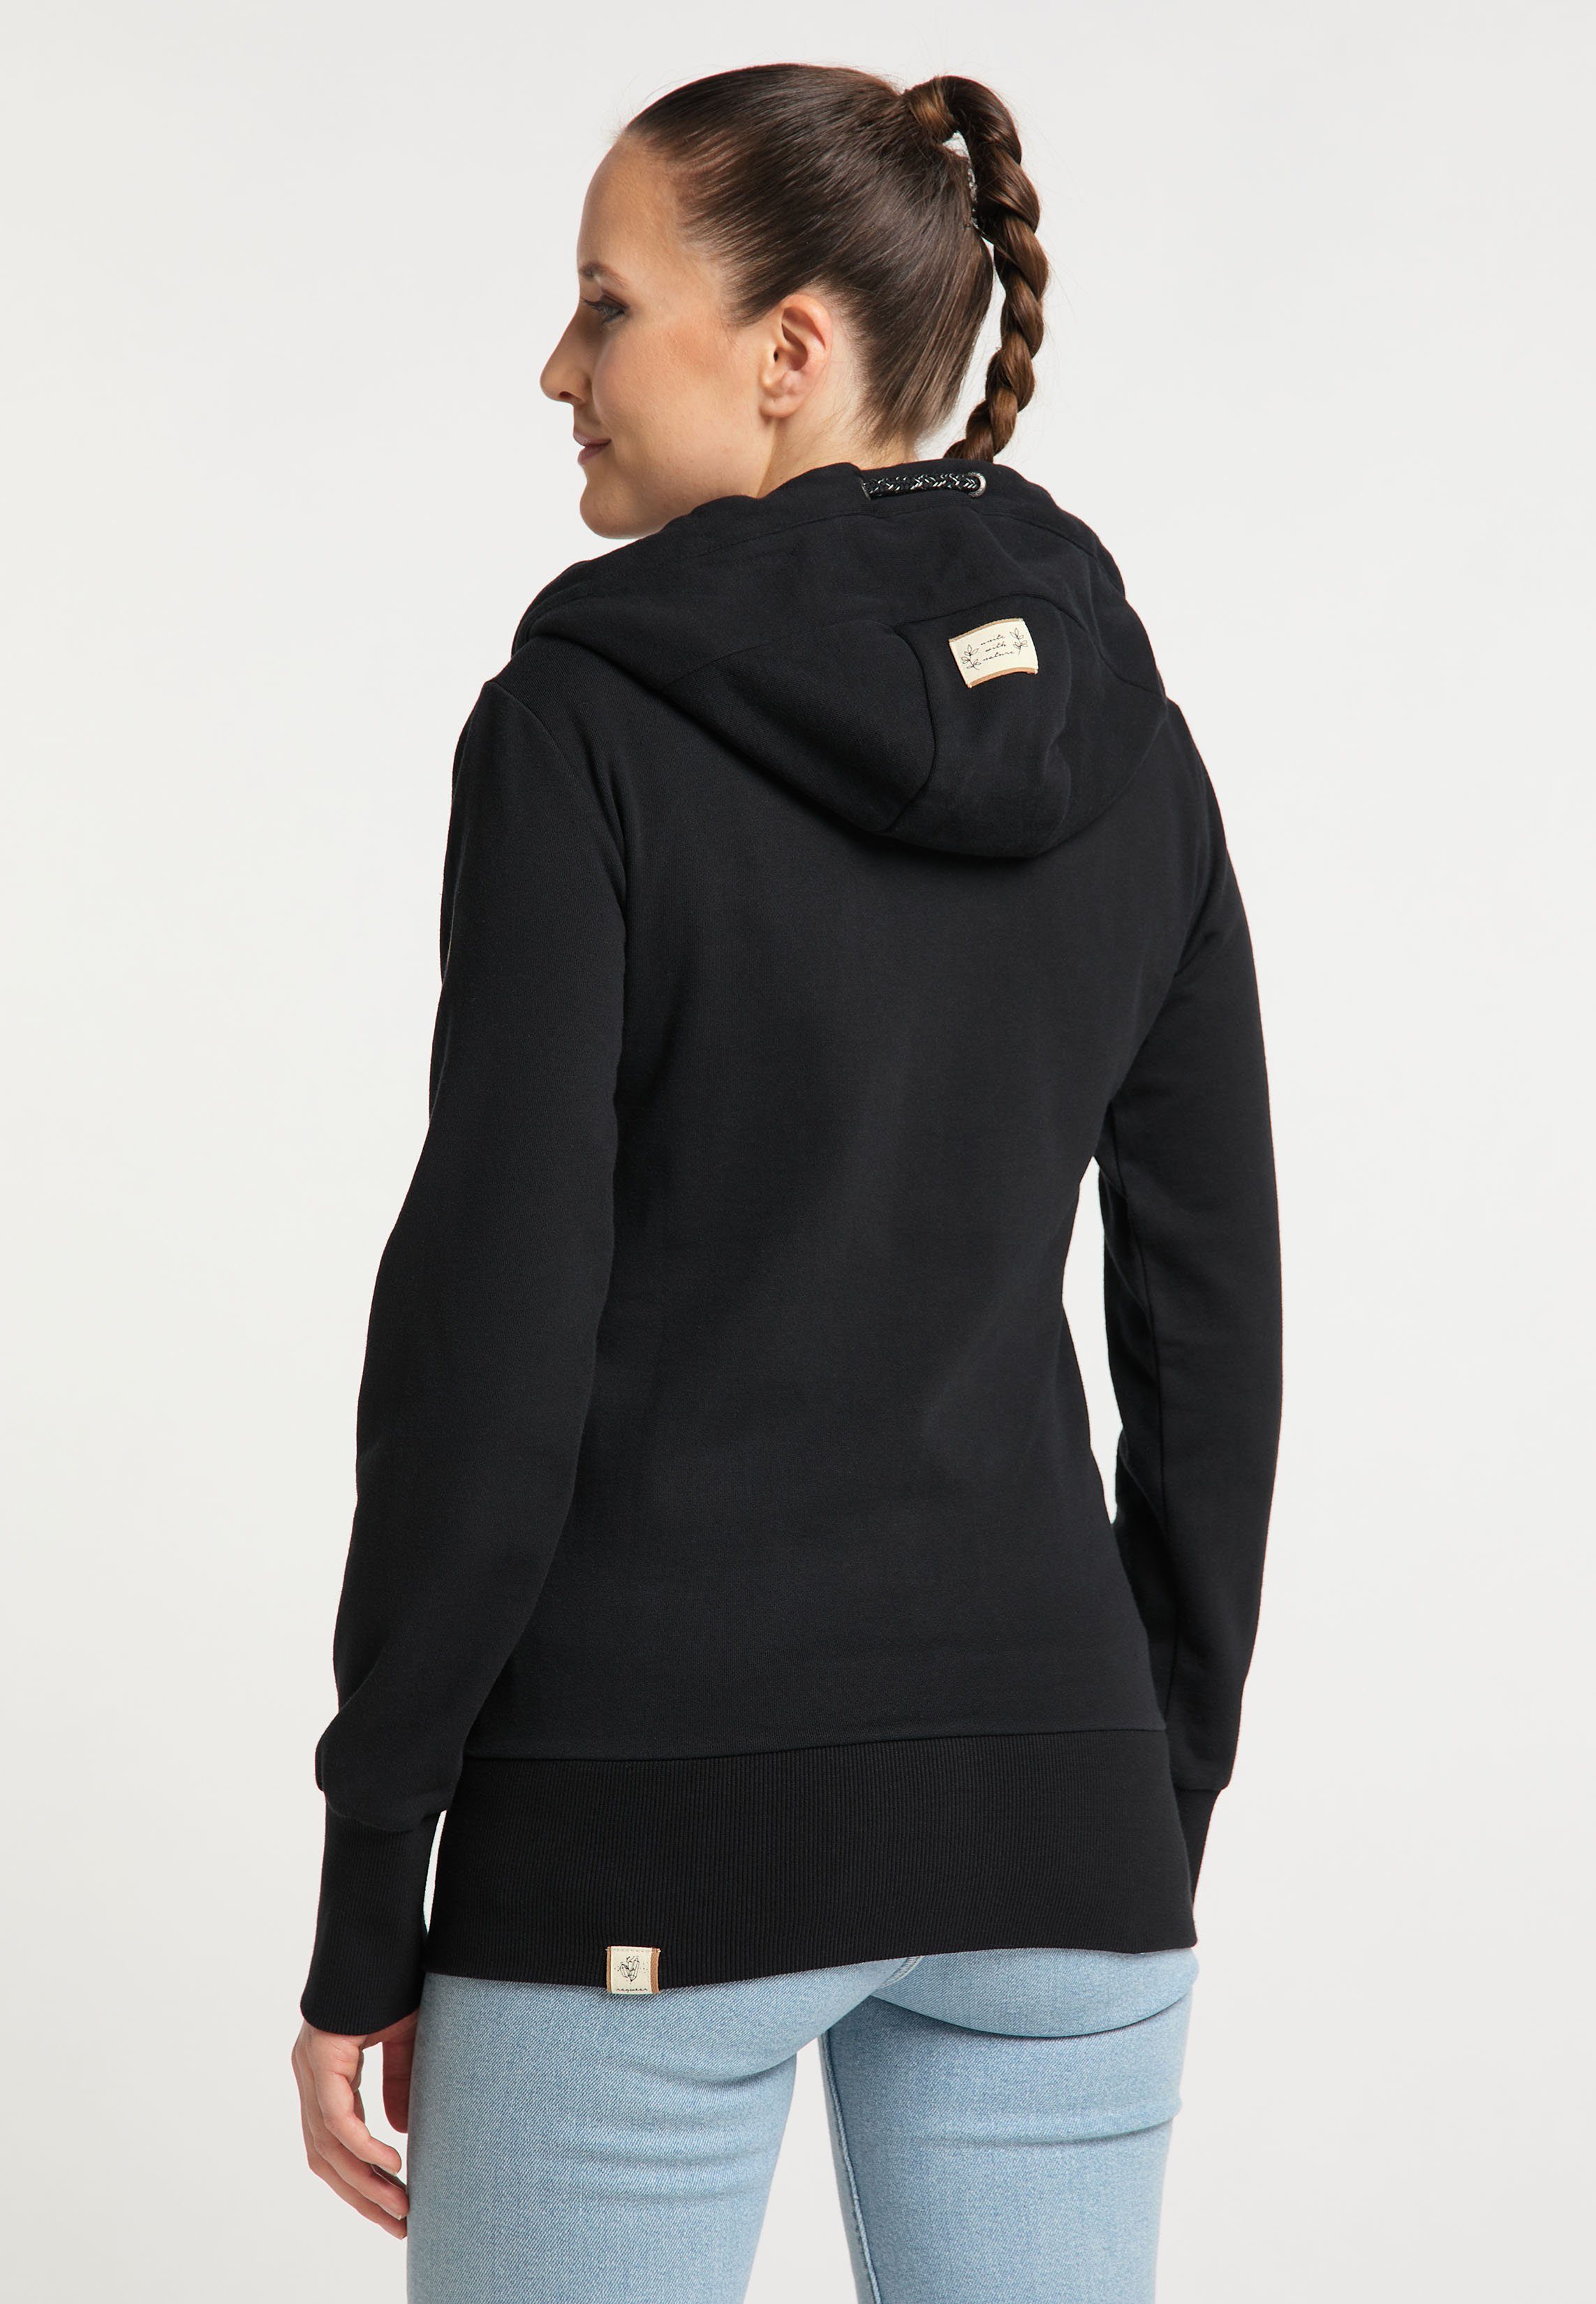 YODA ORGANIC BLACK & Mode Vegane Ragwear Sweatshirt Nachhaltige CRYSTAL